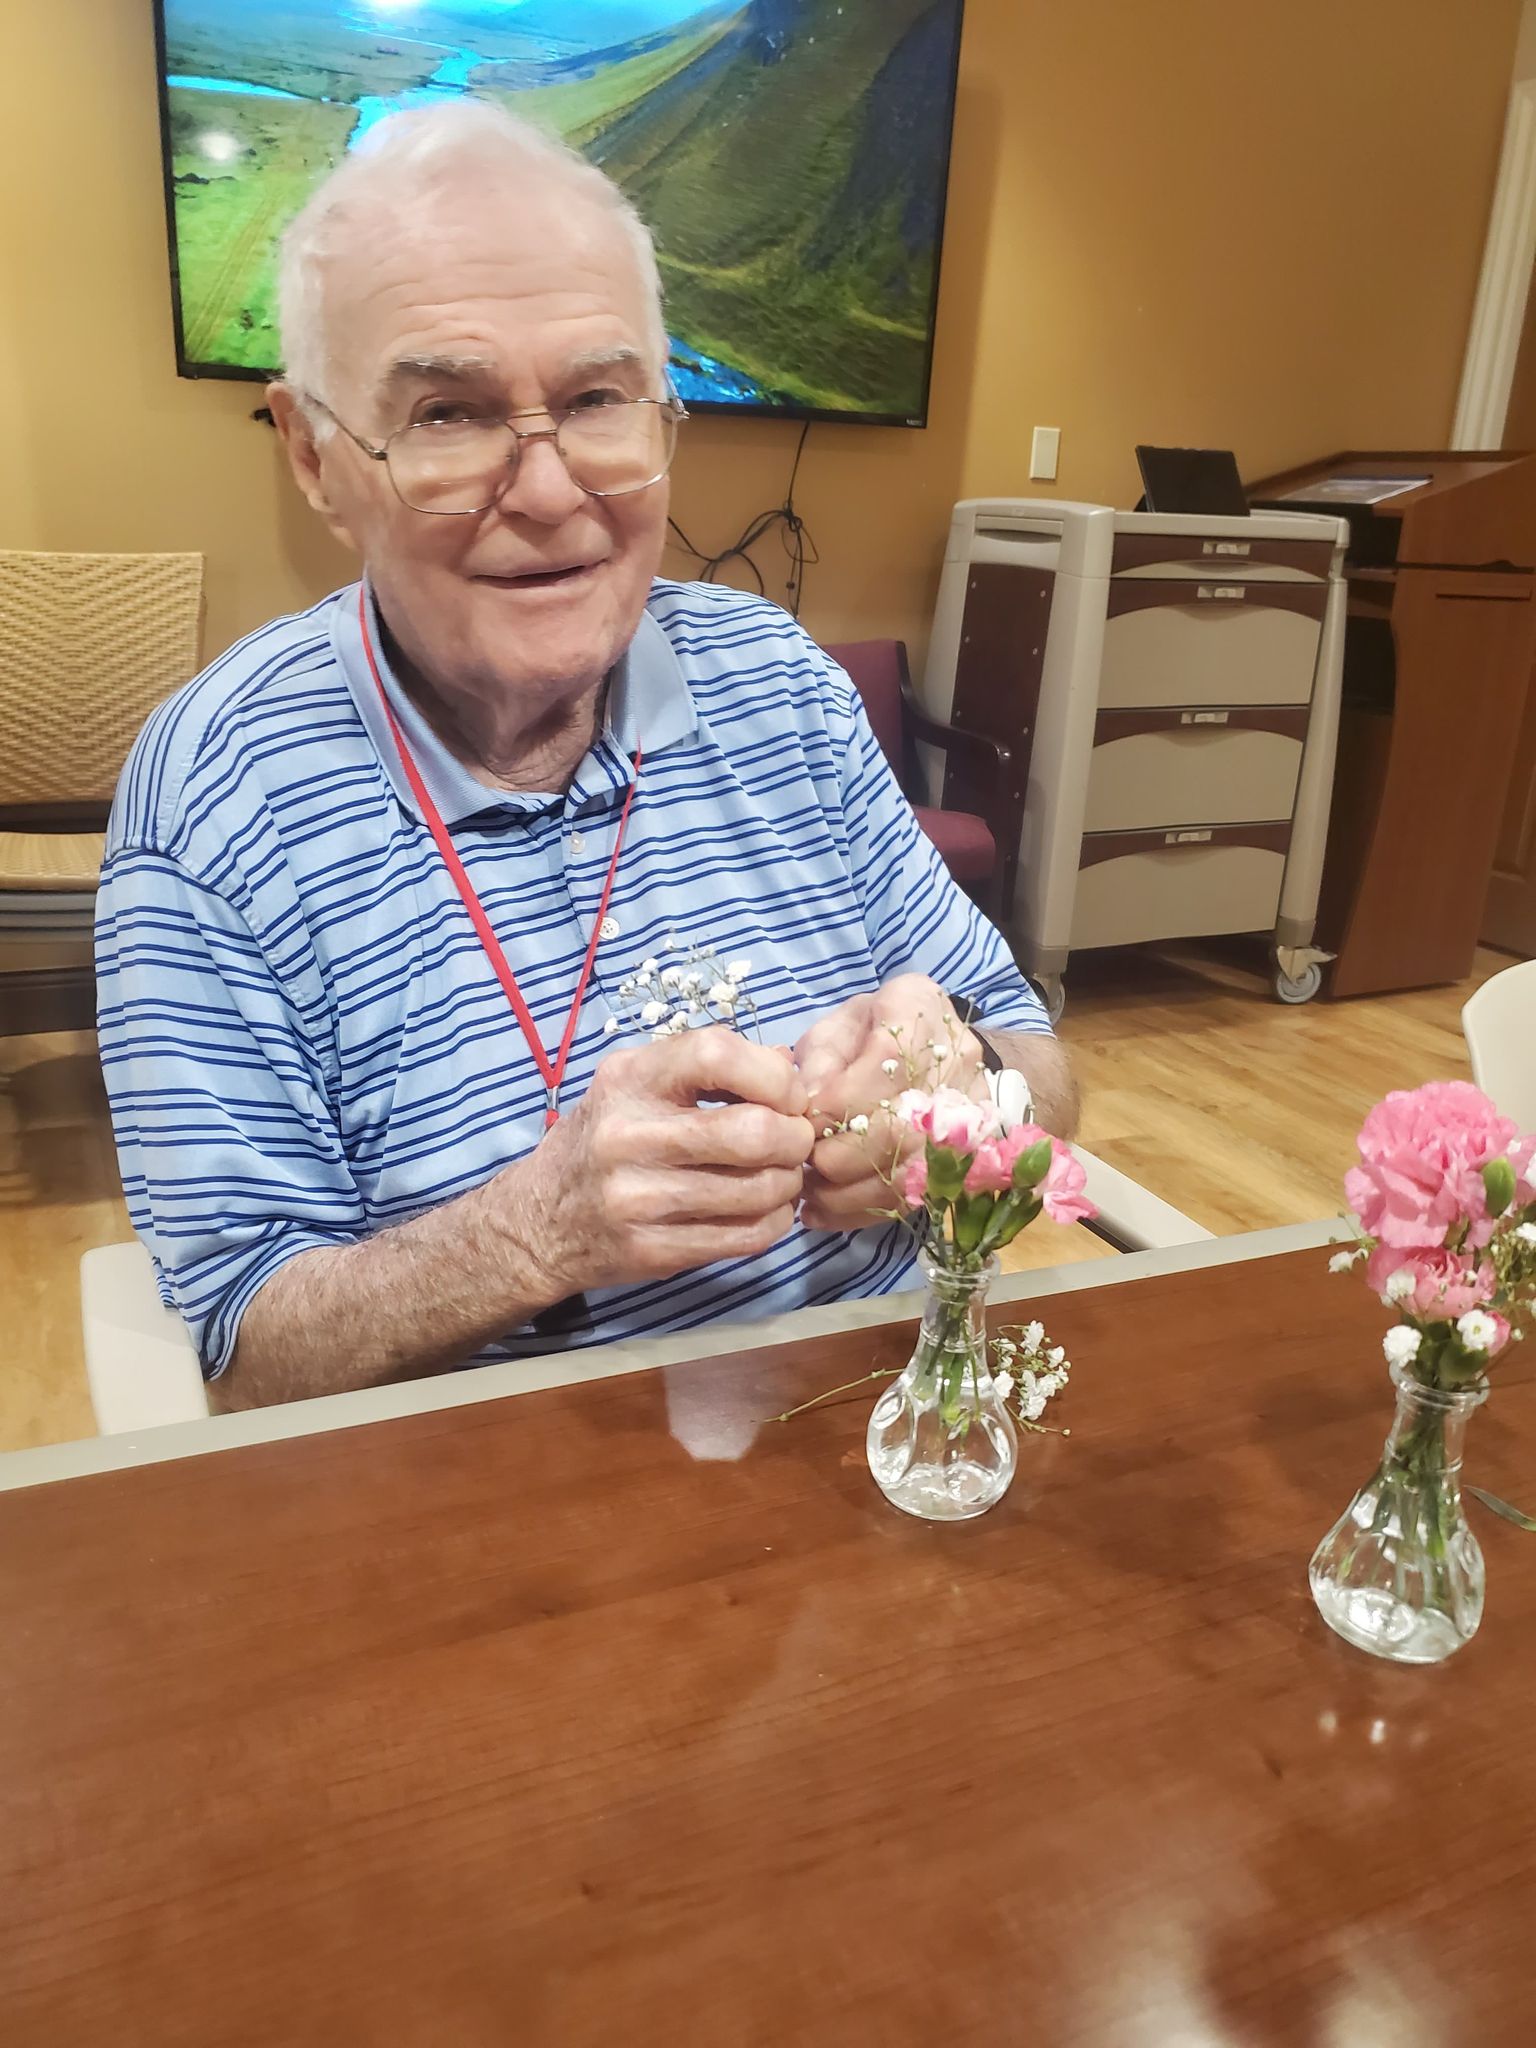 memory care activity - arranging flowers - Bob smiling arranging flowers